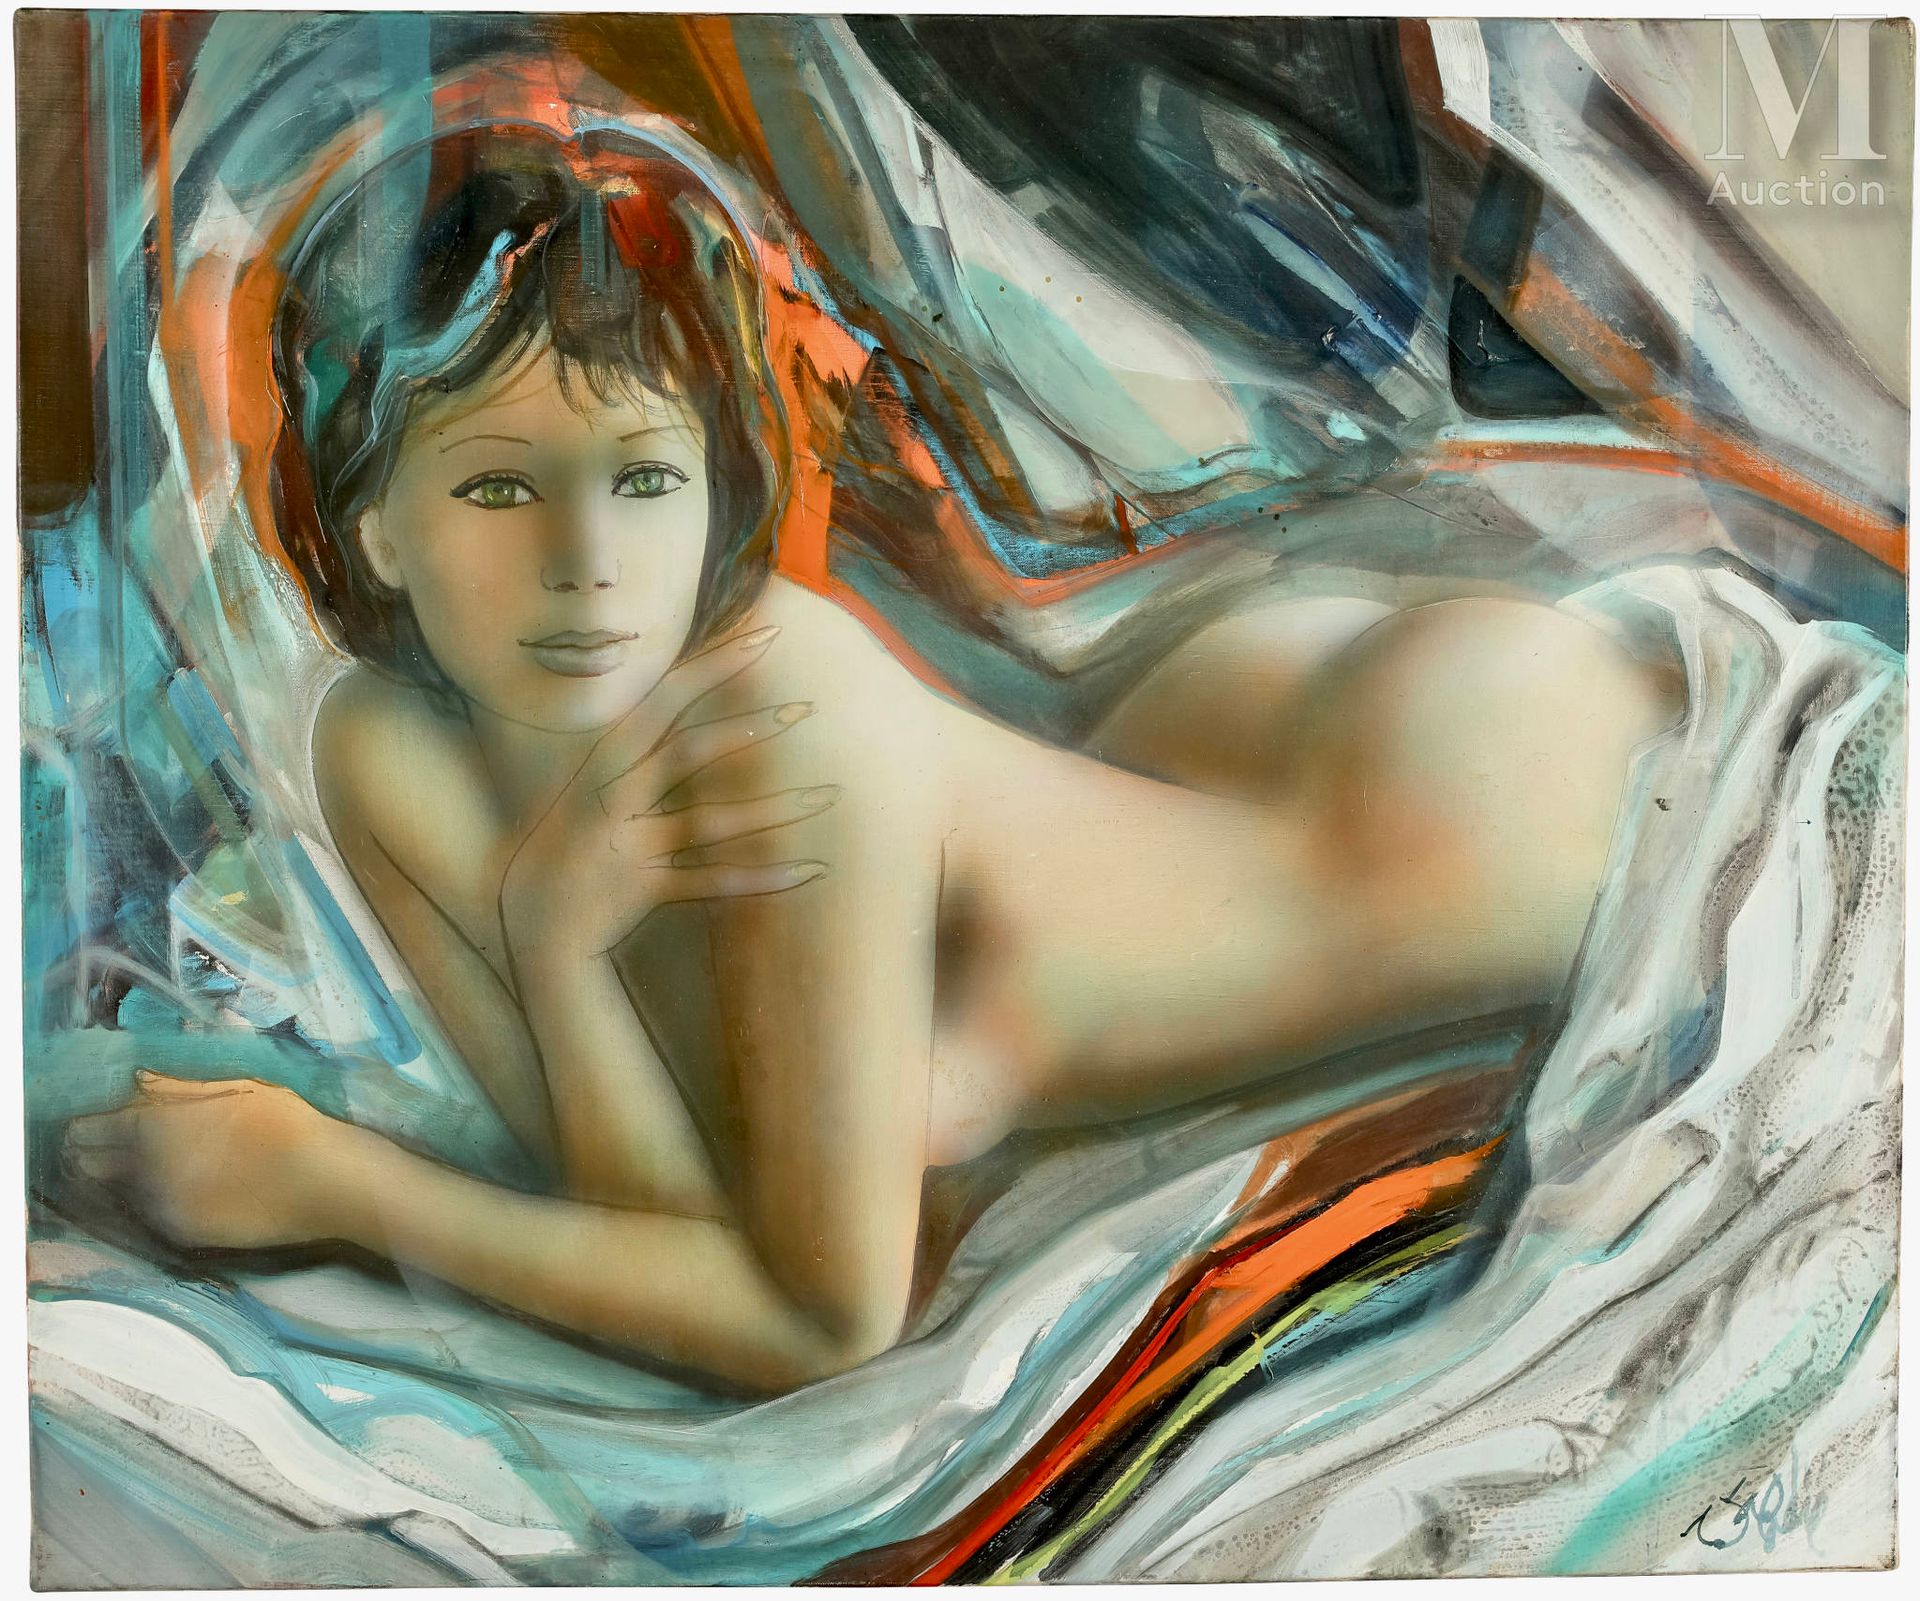 Jean-Baptiste VALADIÉ (1933) 躺在床上的女人
布面油画 
右下方有签名
54 x 65厘米